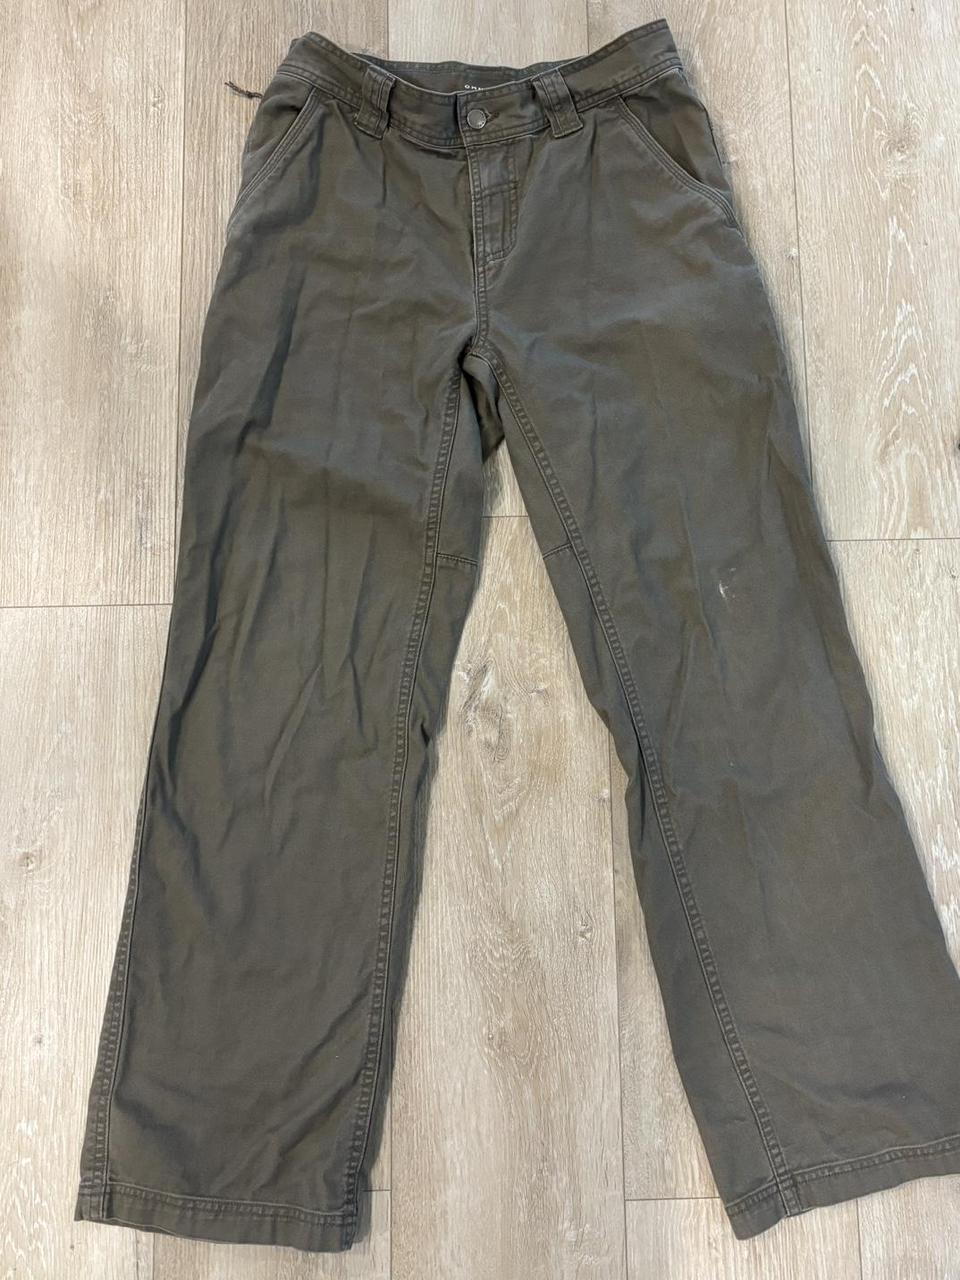 Washed green/brown Columbia sportswear hiking pants... - Depop